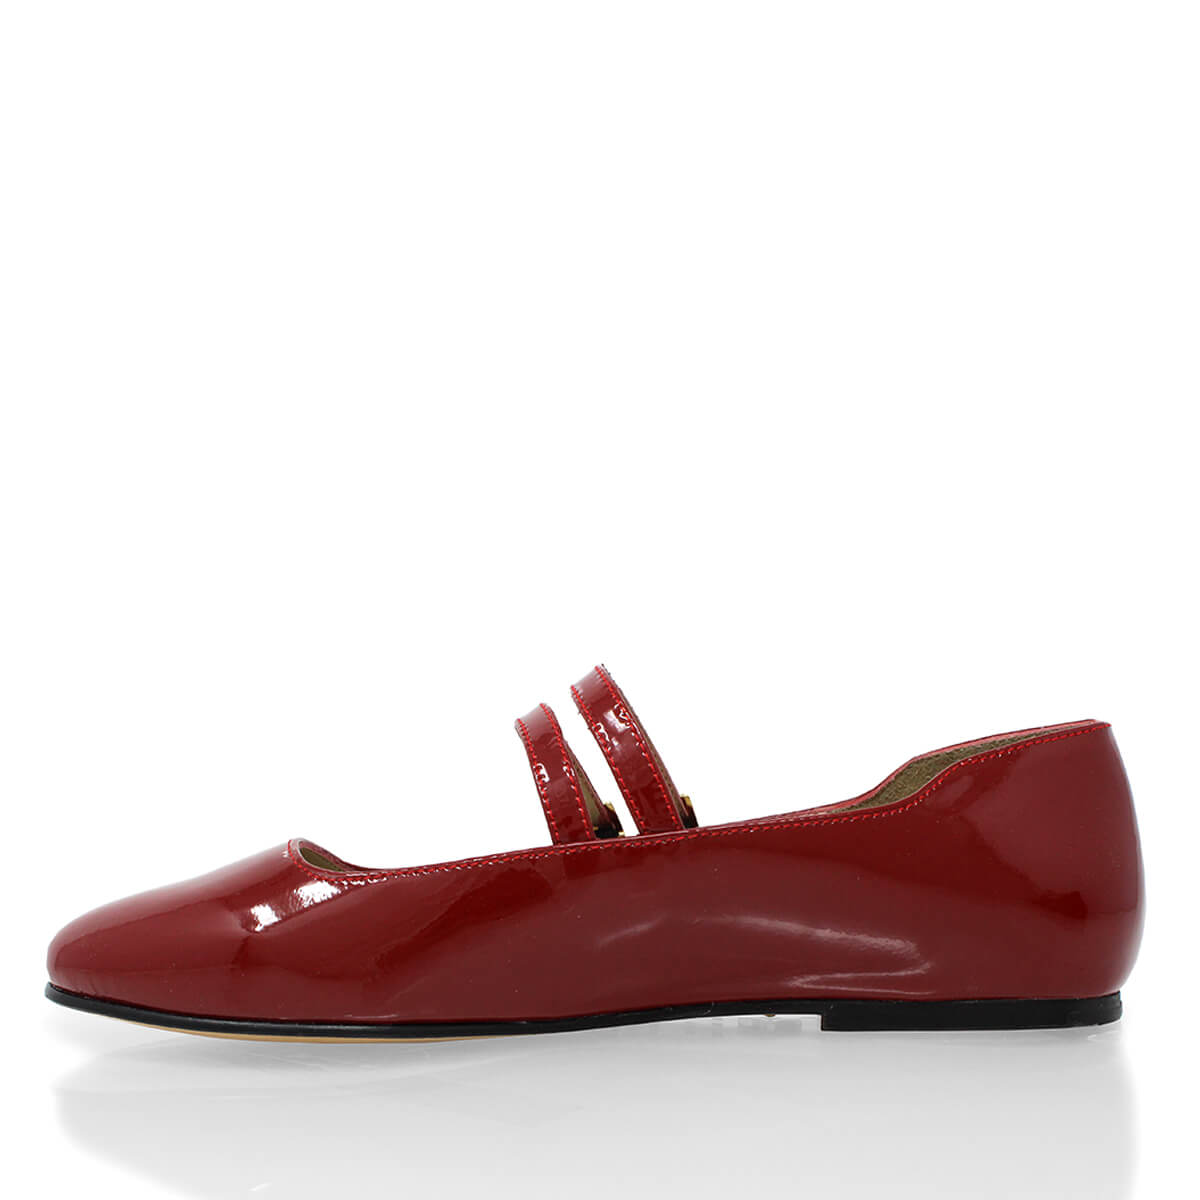 VIOLET - Patent Cherry Regina Romero Flat Ballerina Shoe for Women in Leather